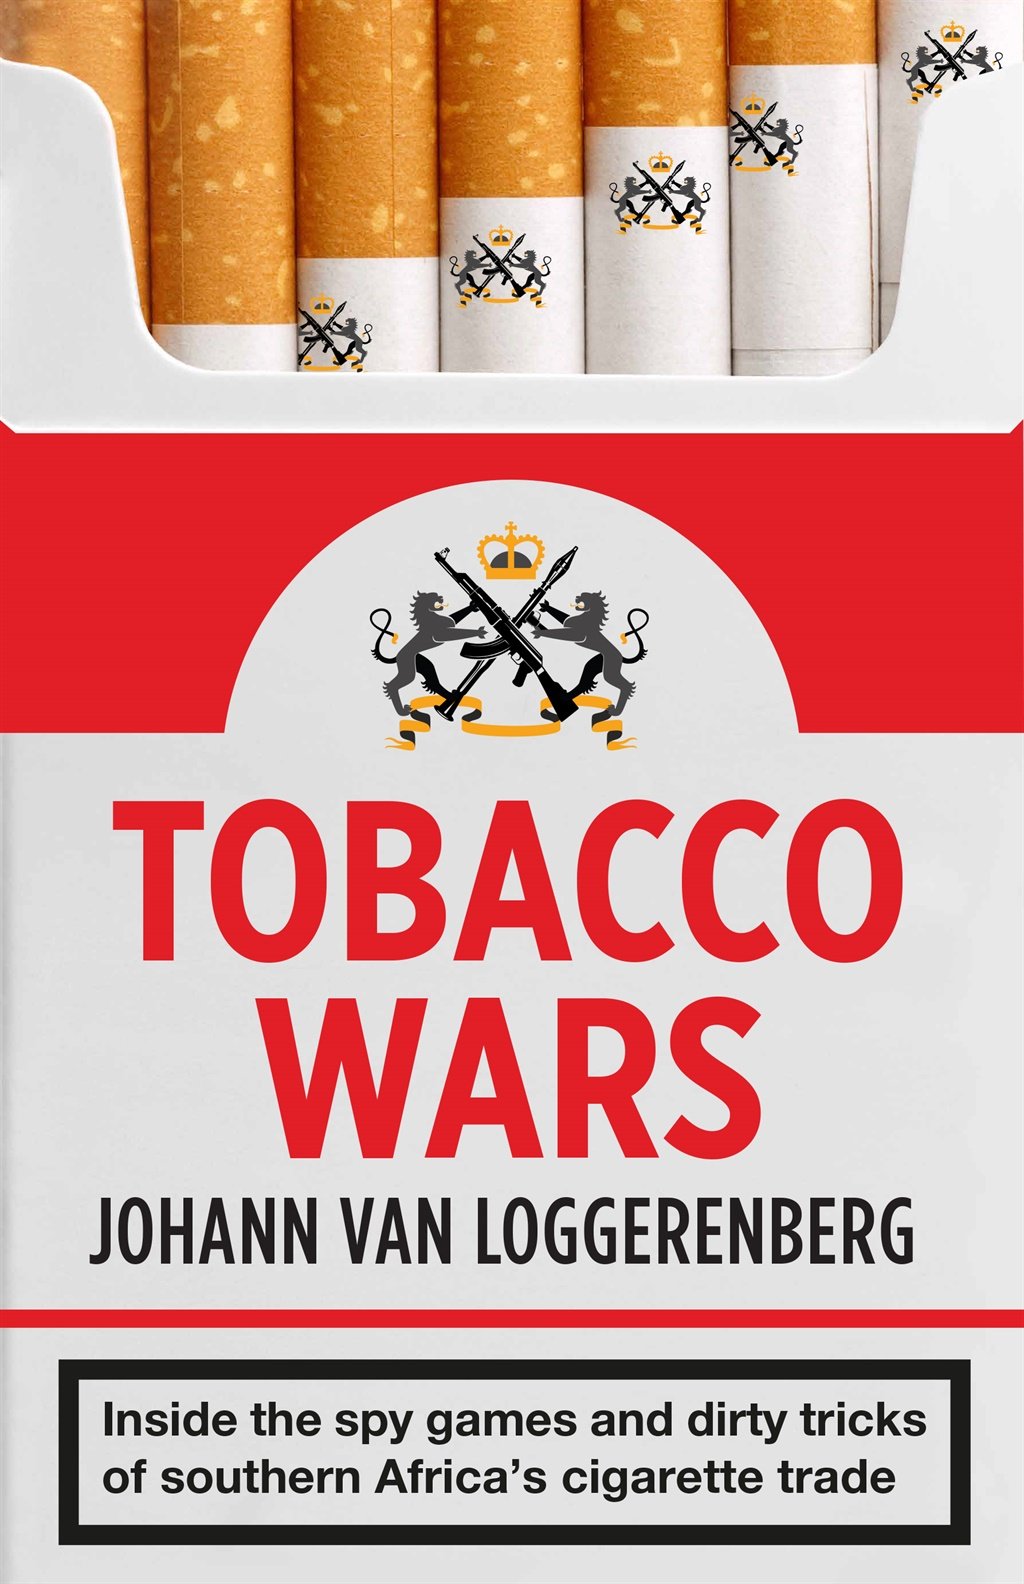 Tobacco Wars by Johann van Loggerenberg published by Tafelberg.